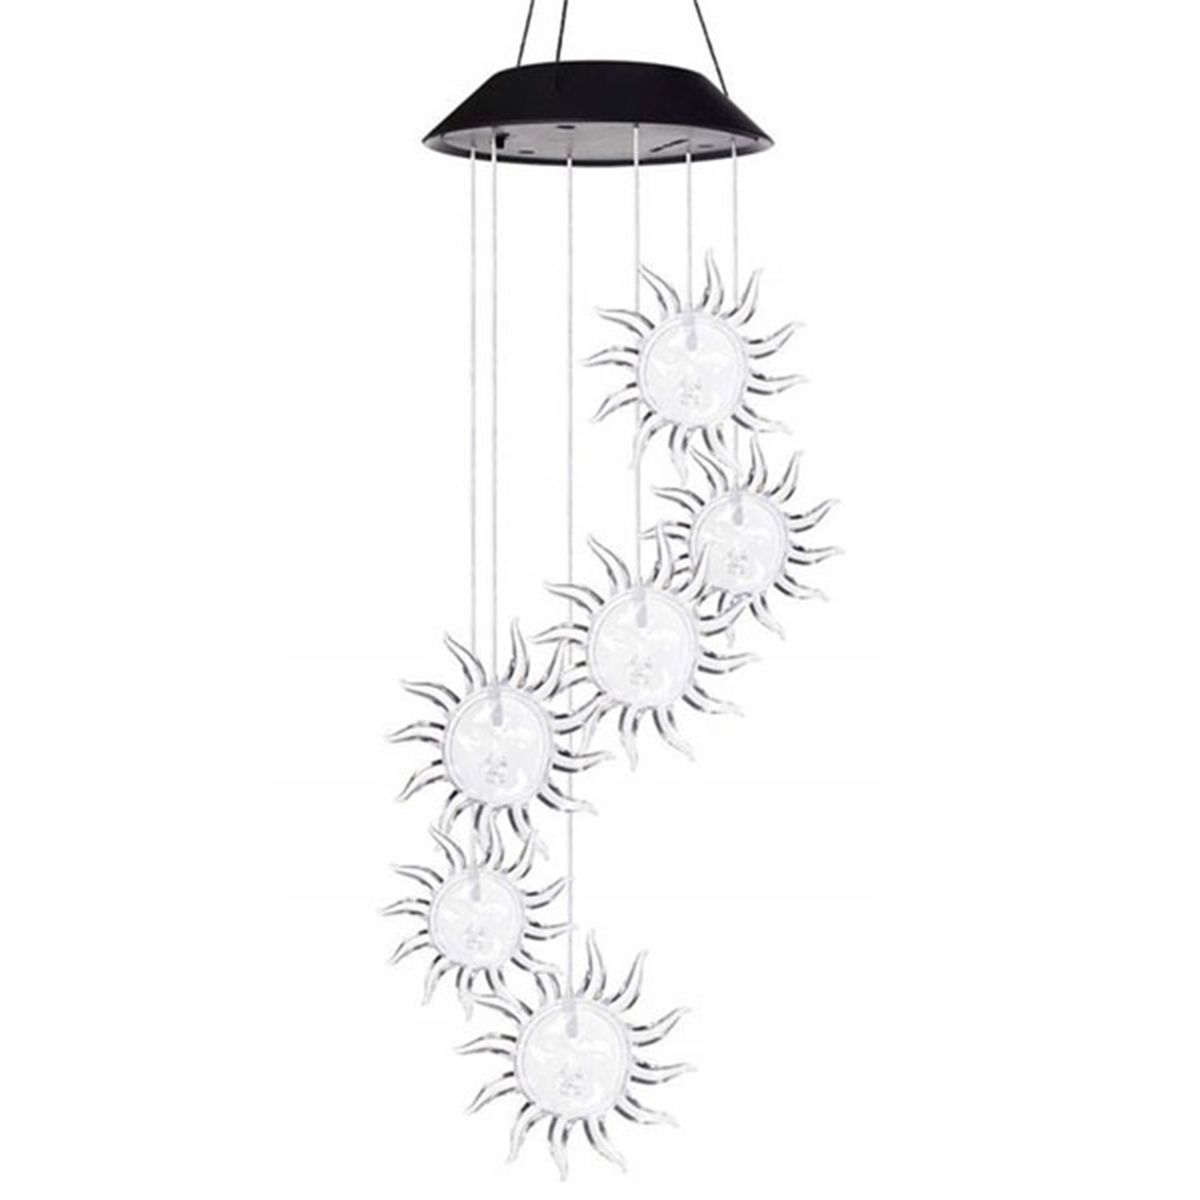 Solar-LED-Sunflower-Wind-Chime-Garden-Hanging-Spinner-Light-Color-Changing-Lamp-1638298